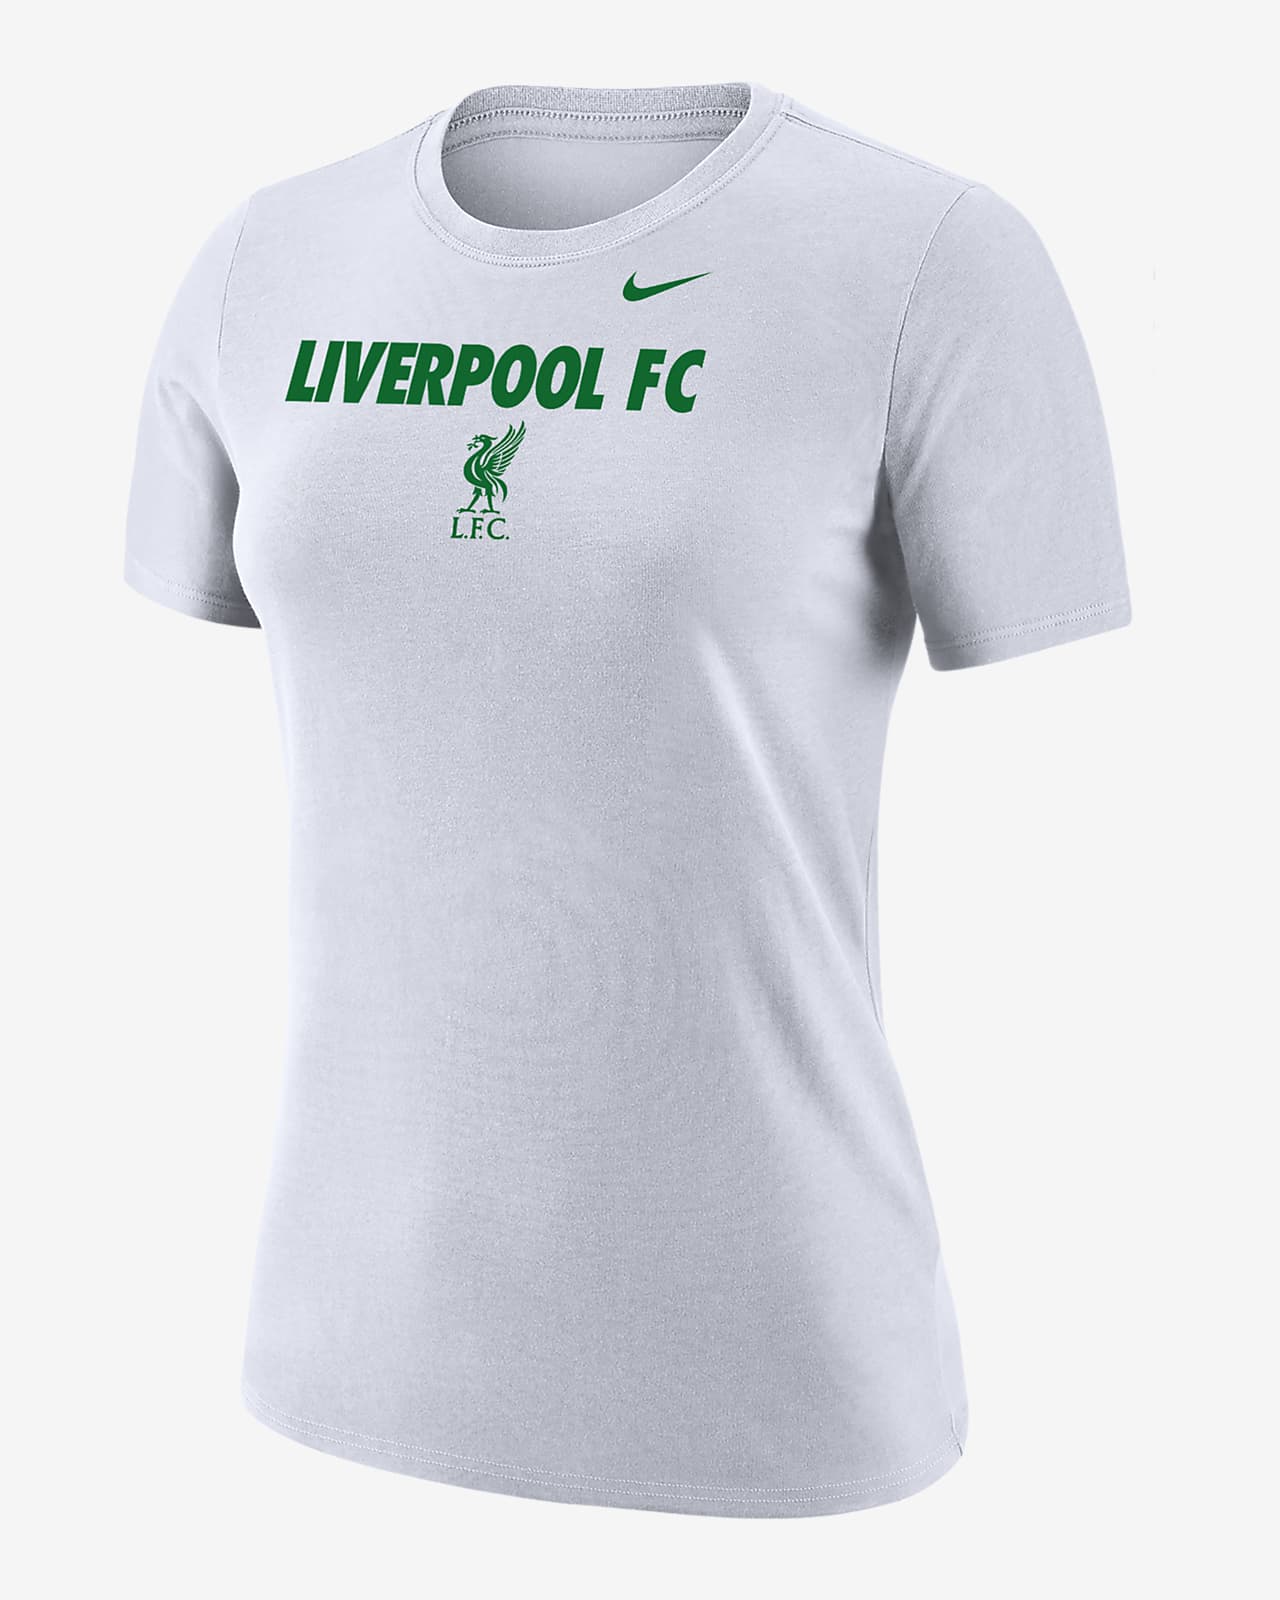 Liverpool FC Women's Nike Soccer T-Shirt